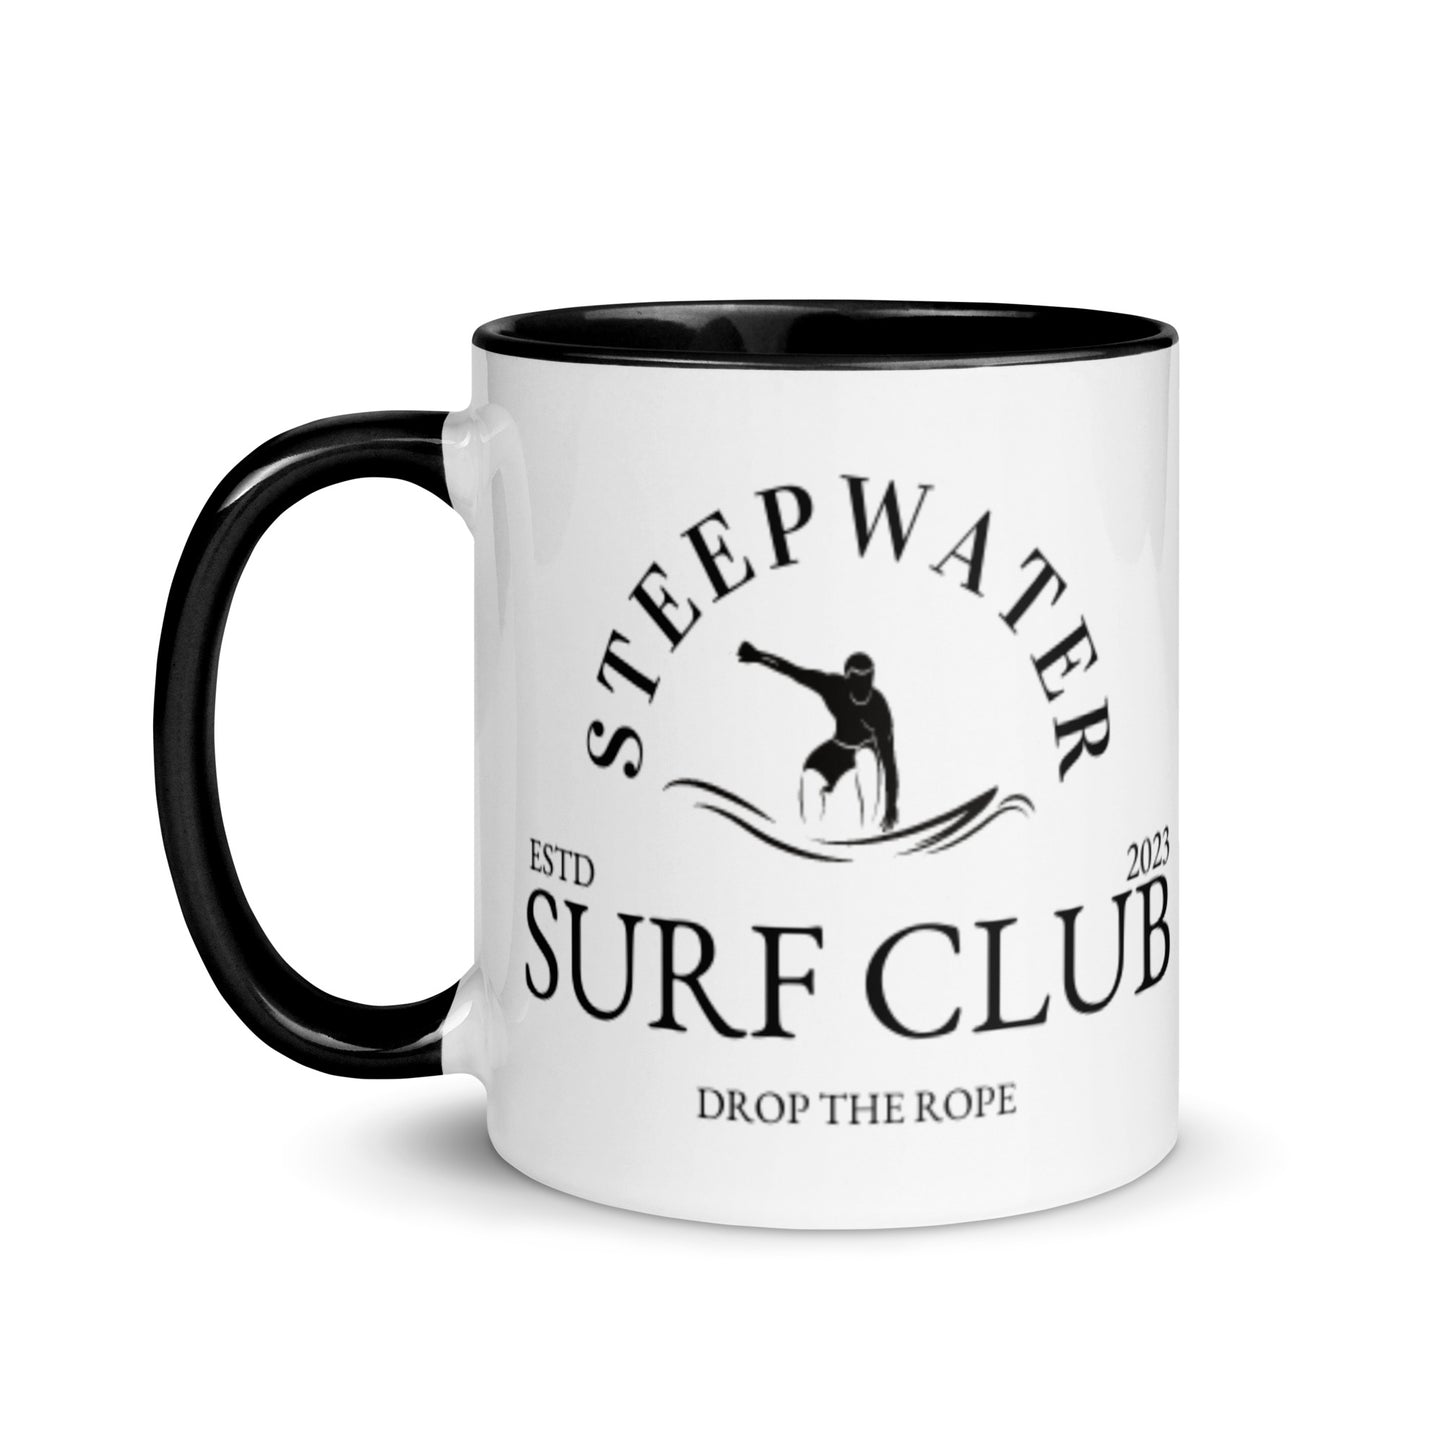 Steepwater Surf Mug